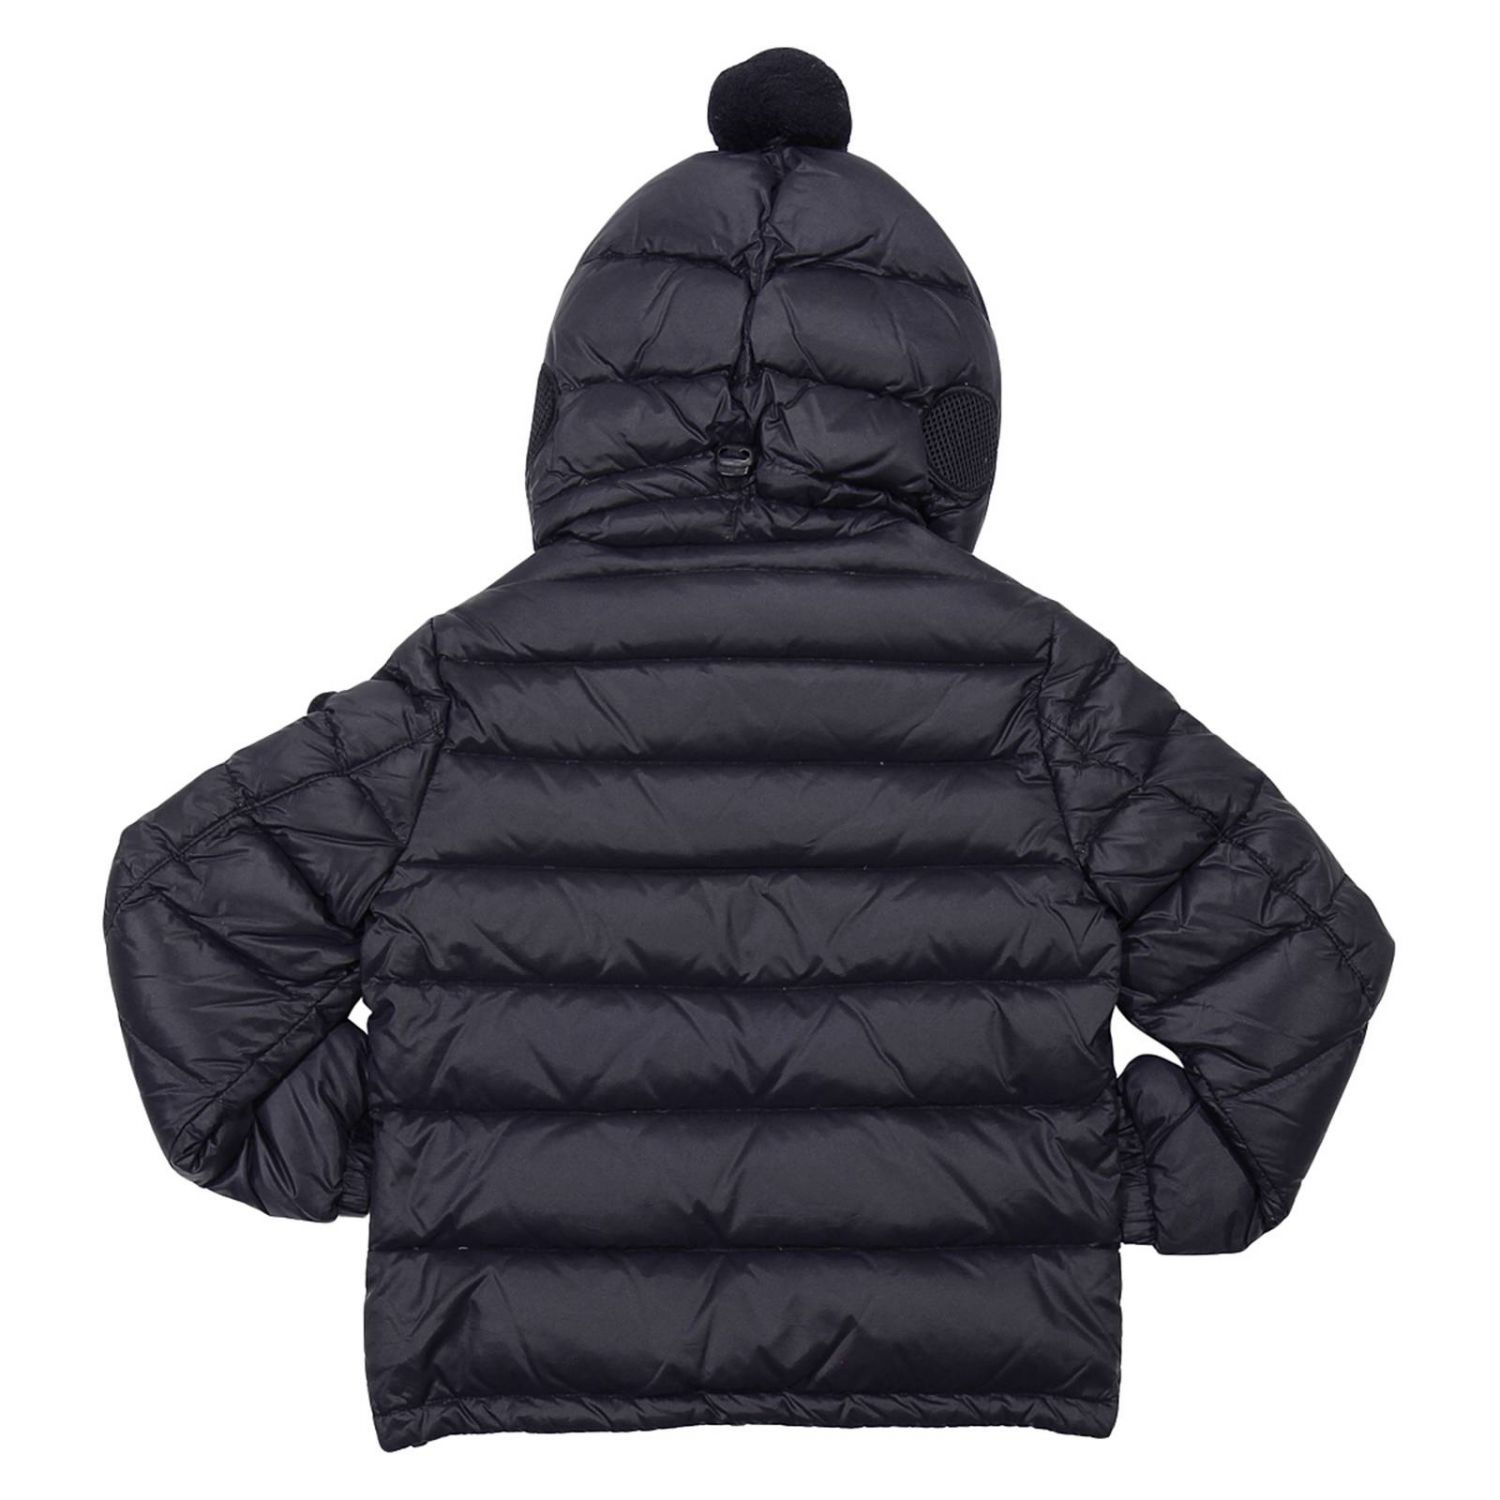 AI RIDERS: coat for boys - Black | Ai Riders coat JGG101TMR490 online ...